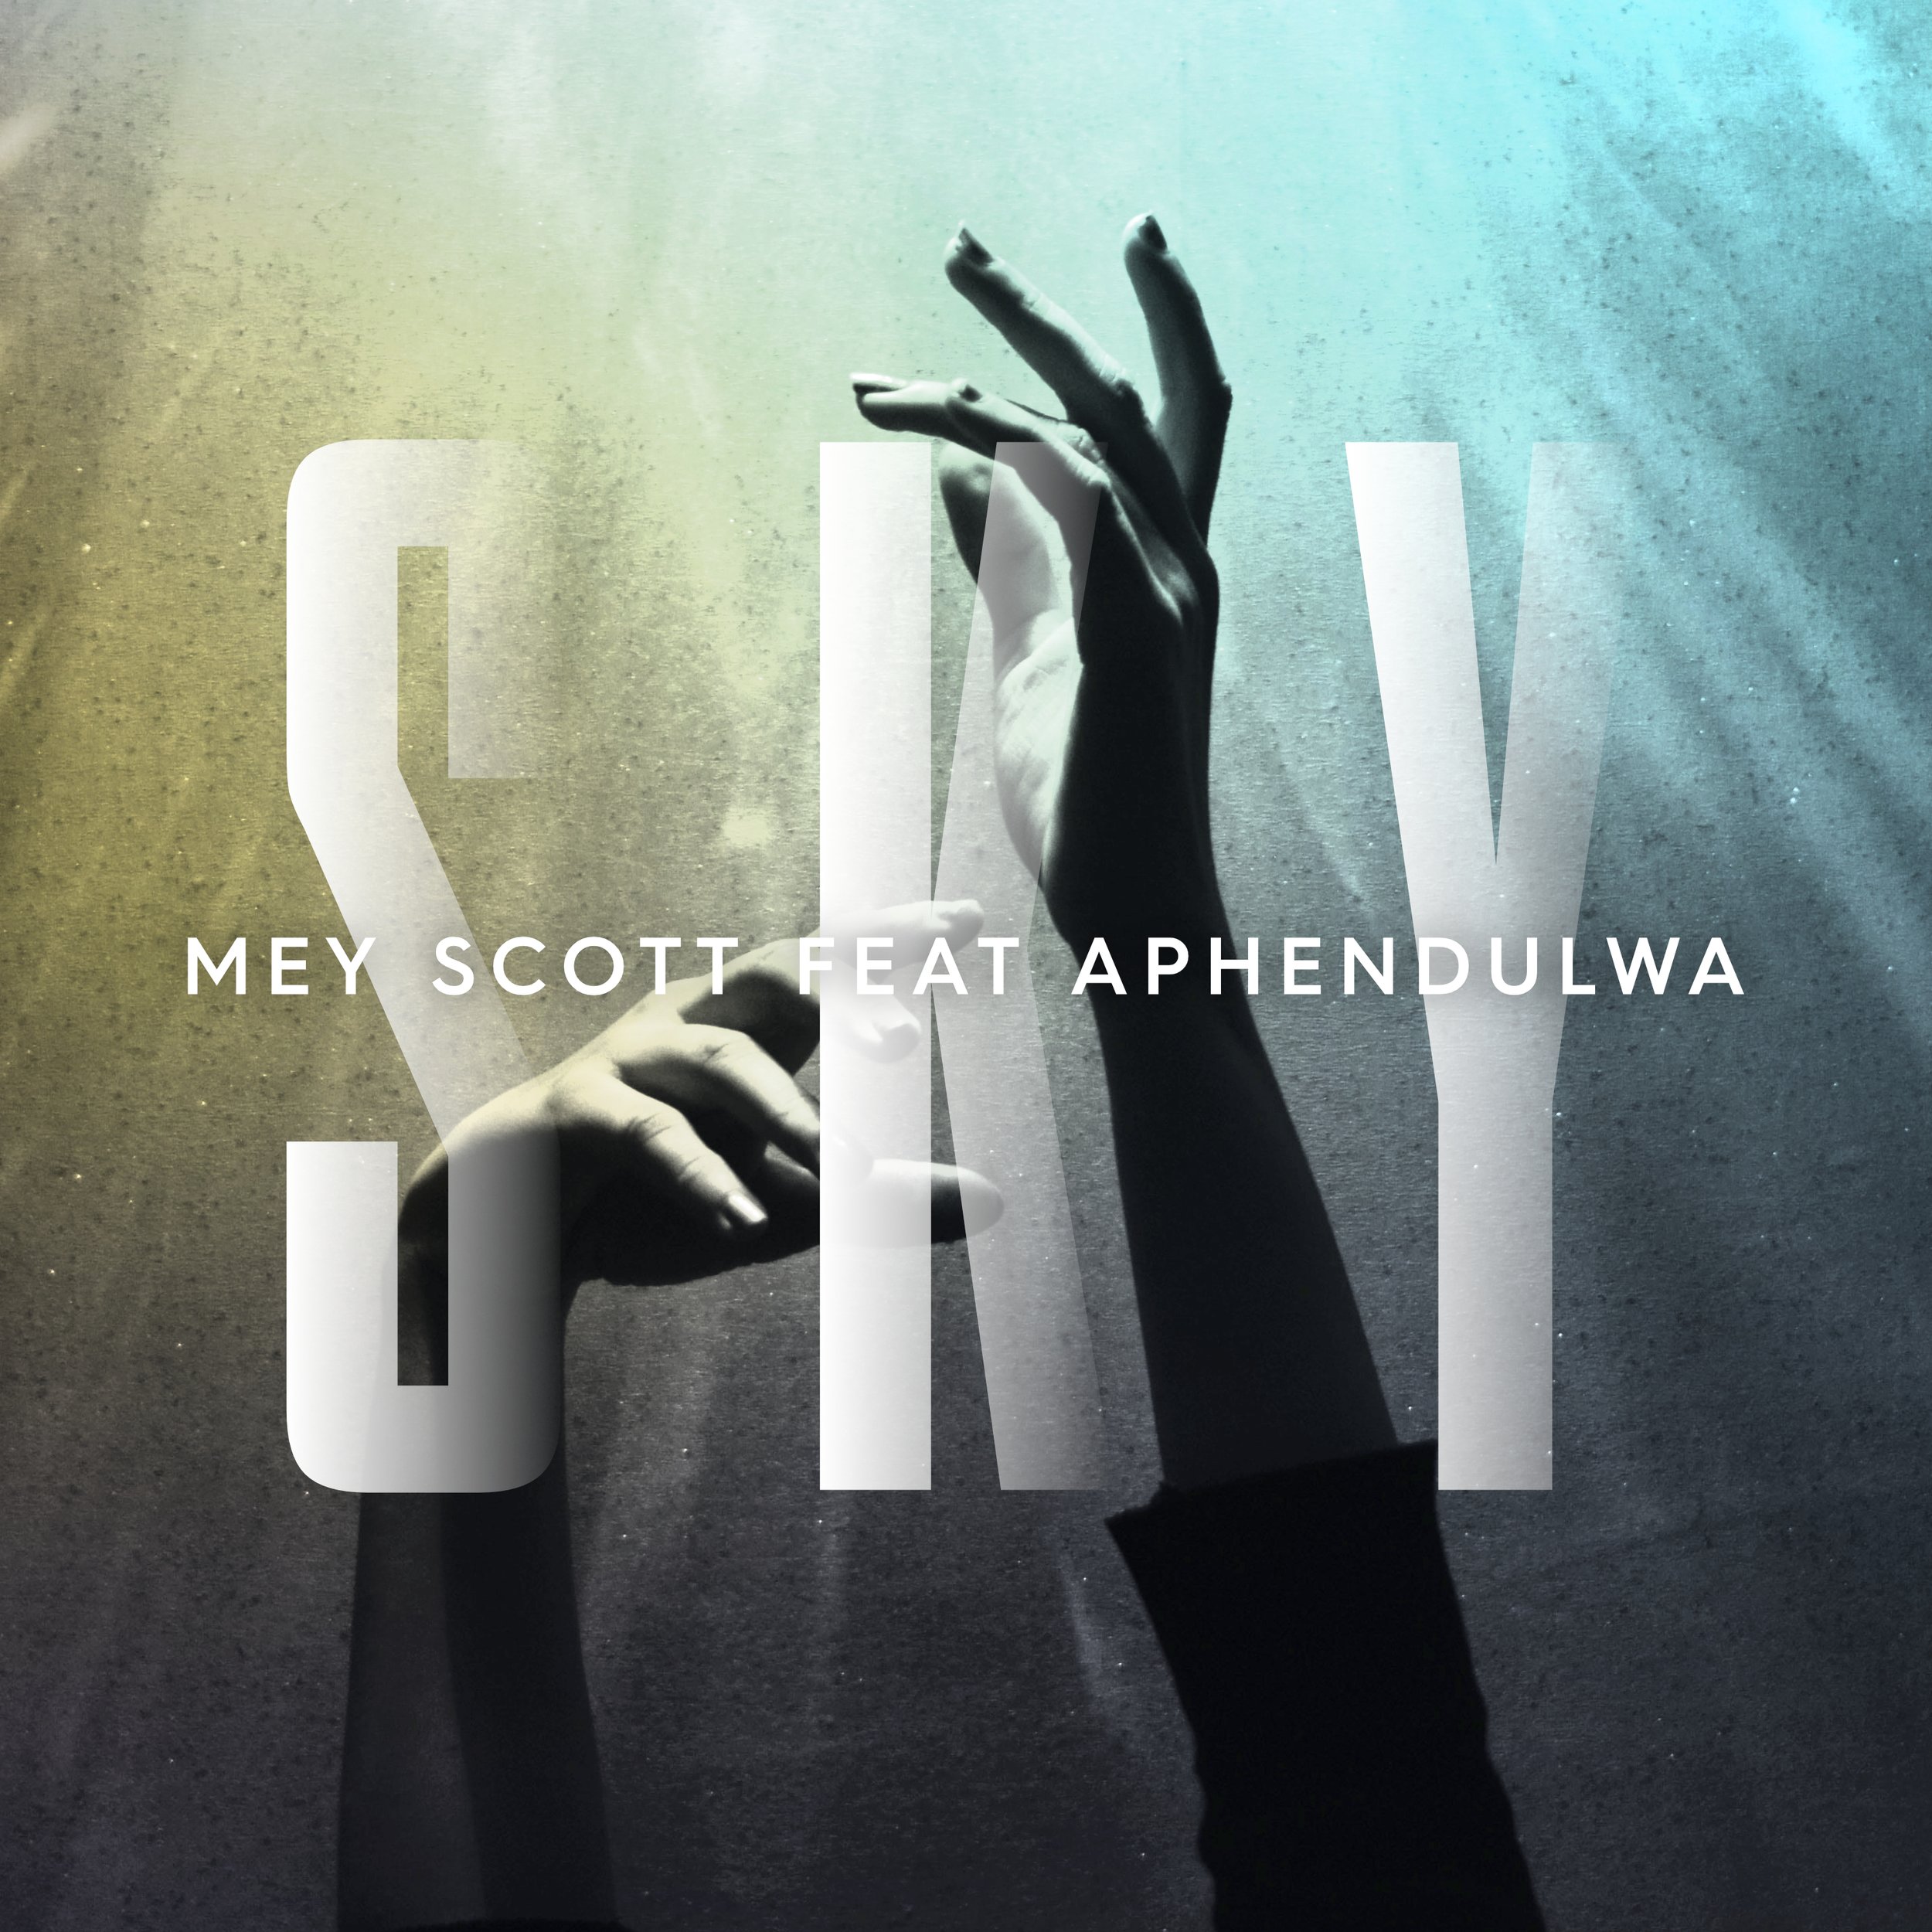 Mey Scott ft. Aphendulwa - Sky (Original) - Artwork 2.jpg